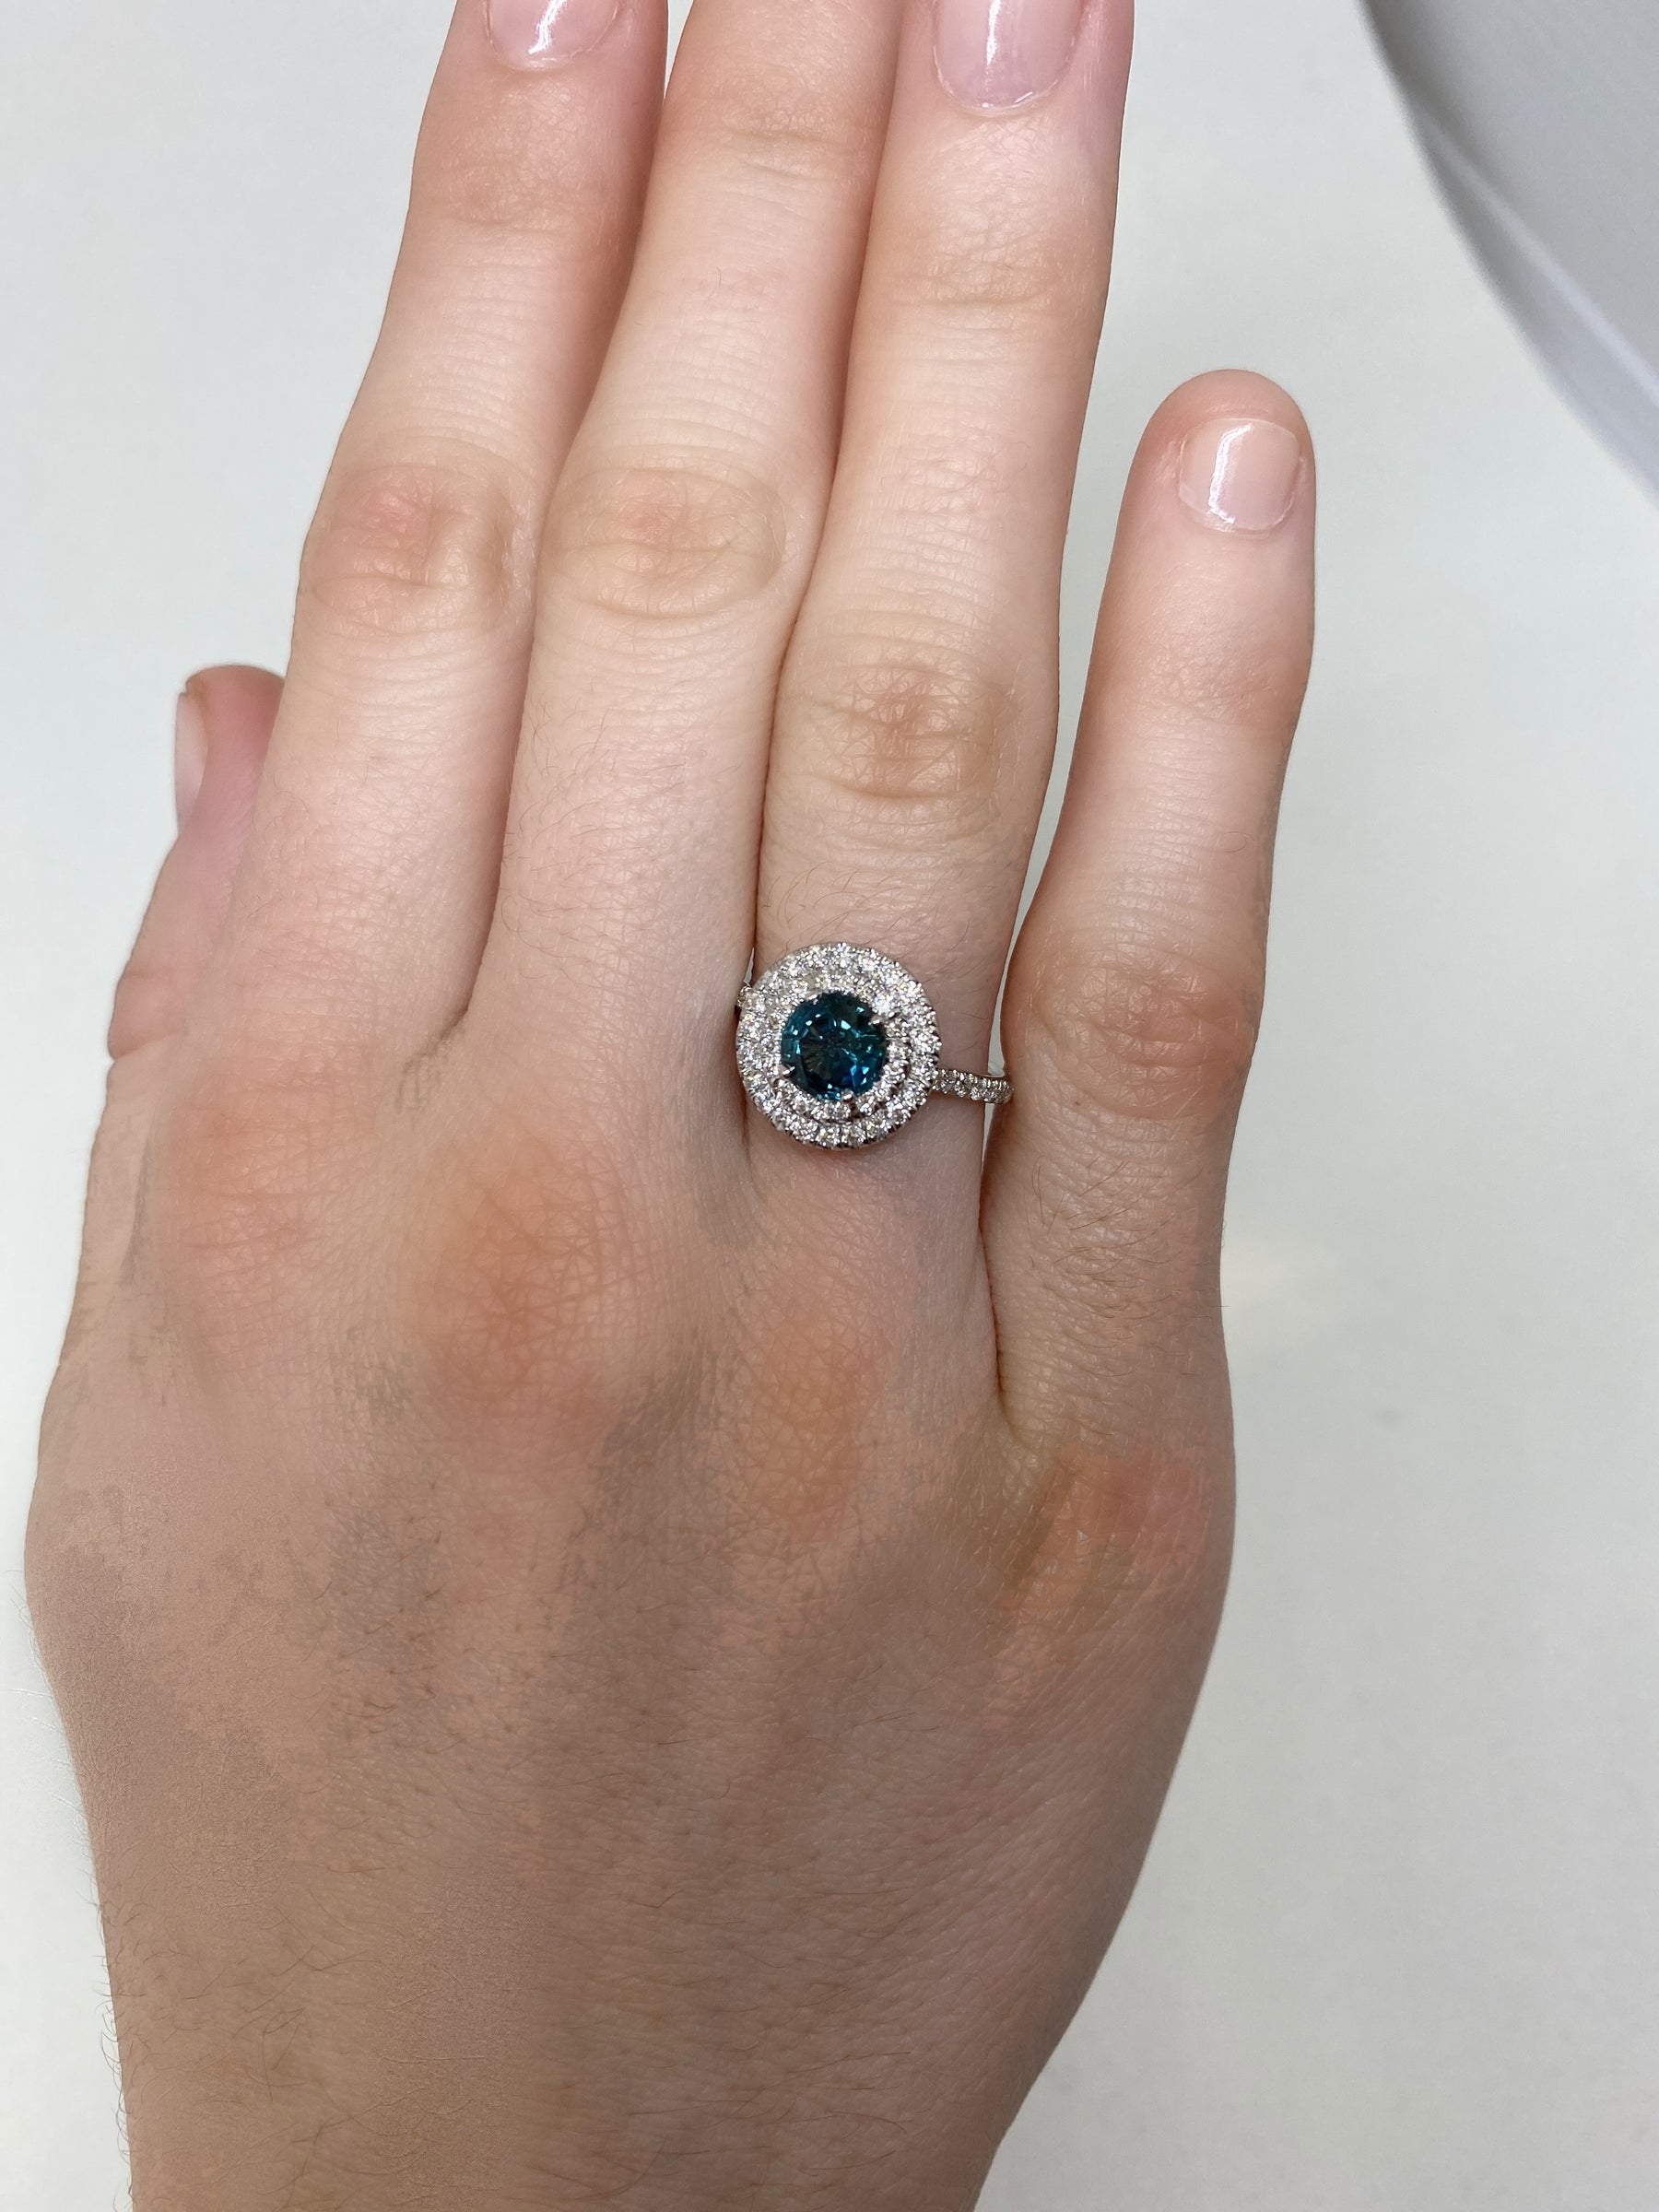 18K White Gold Double Diamond Halo Montana Teal Sapphire Ring on Model